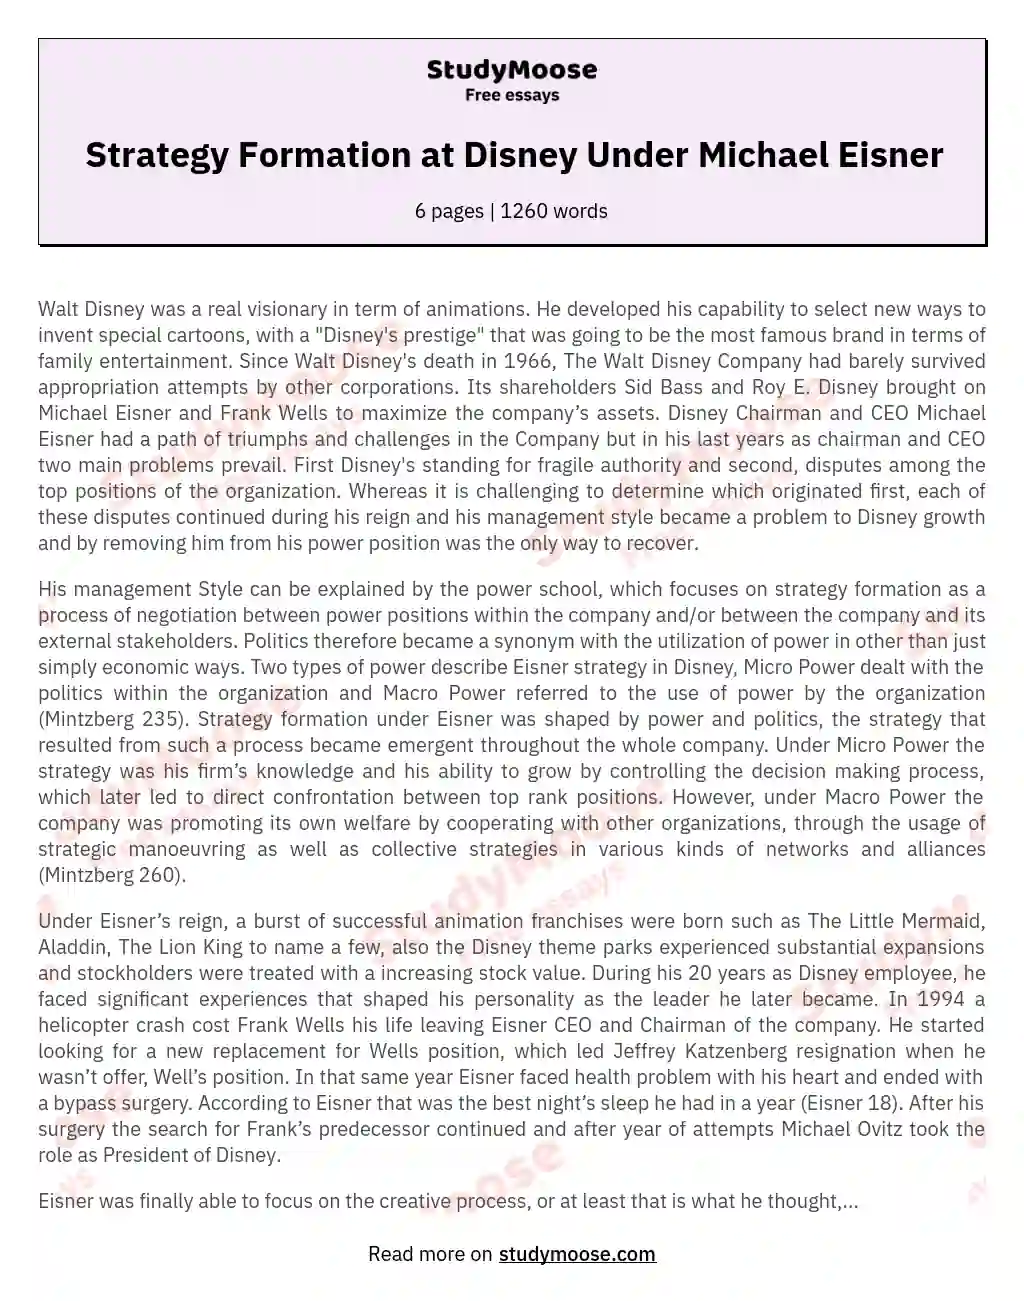 Strategy Formation at Disney Under Michael Eisner essay